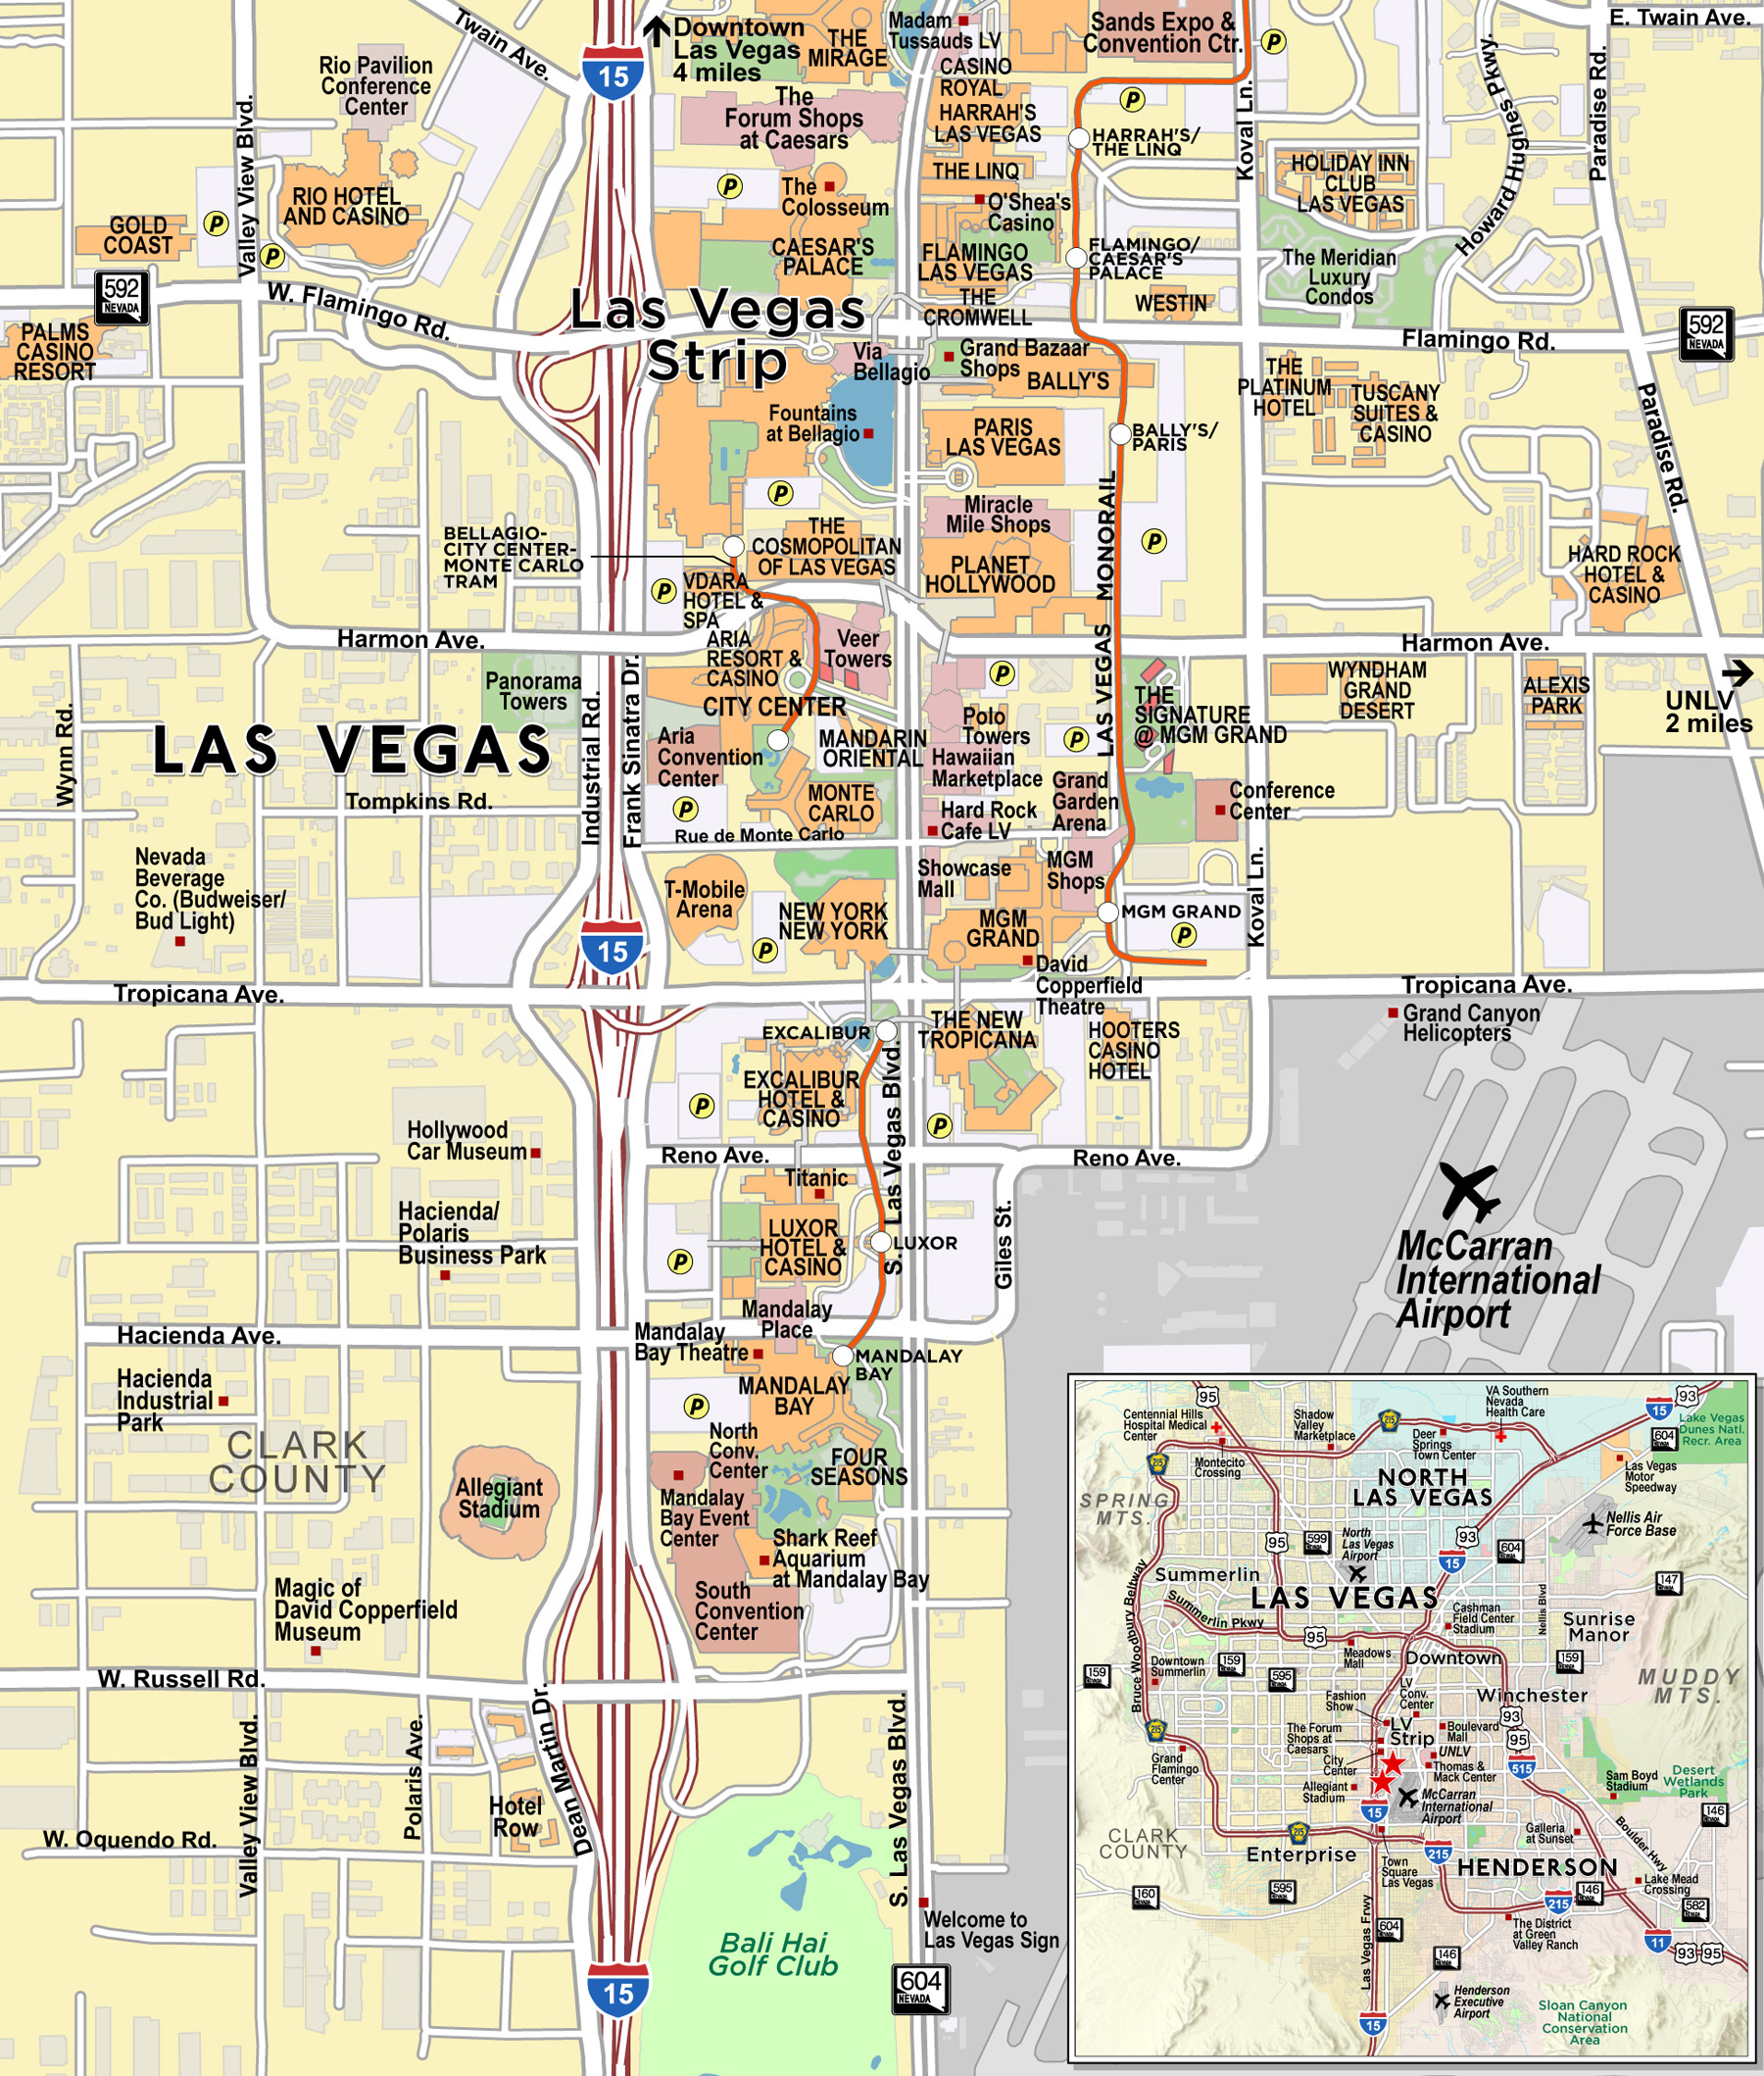 Show map of casinos on vegas strip